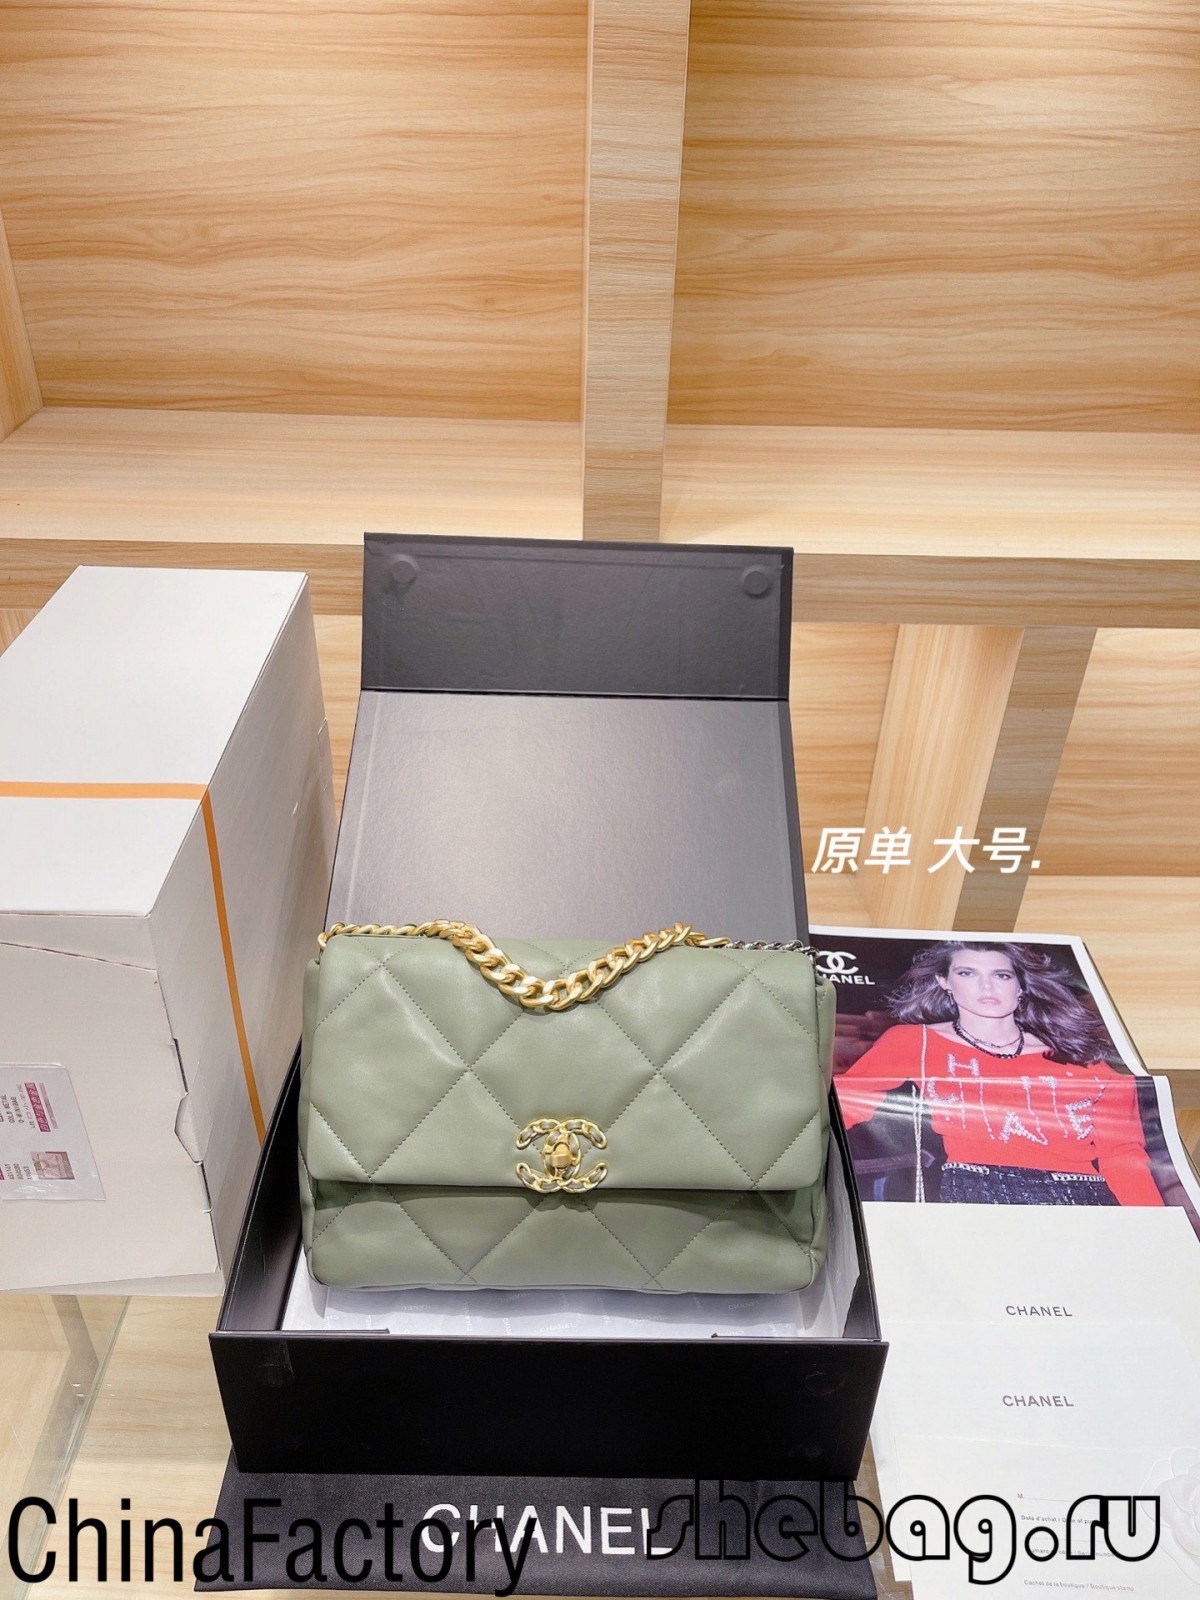 Aaa Chanel bag replica: Chanel 19 replica bag review (Oppdatert i 2022)-Best Quality Fake Louis Vuitton Bag Online Store, Replica designer bag ru